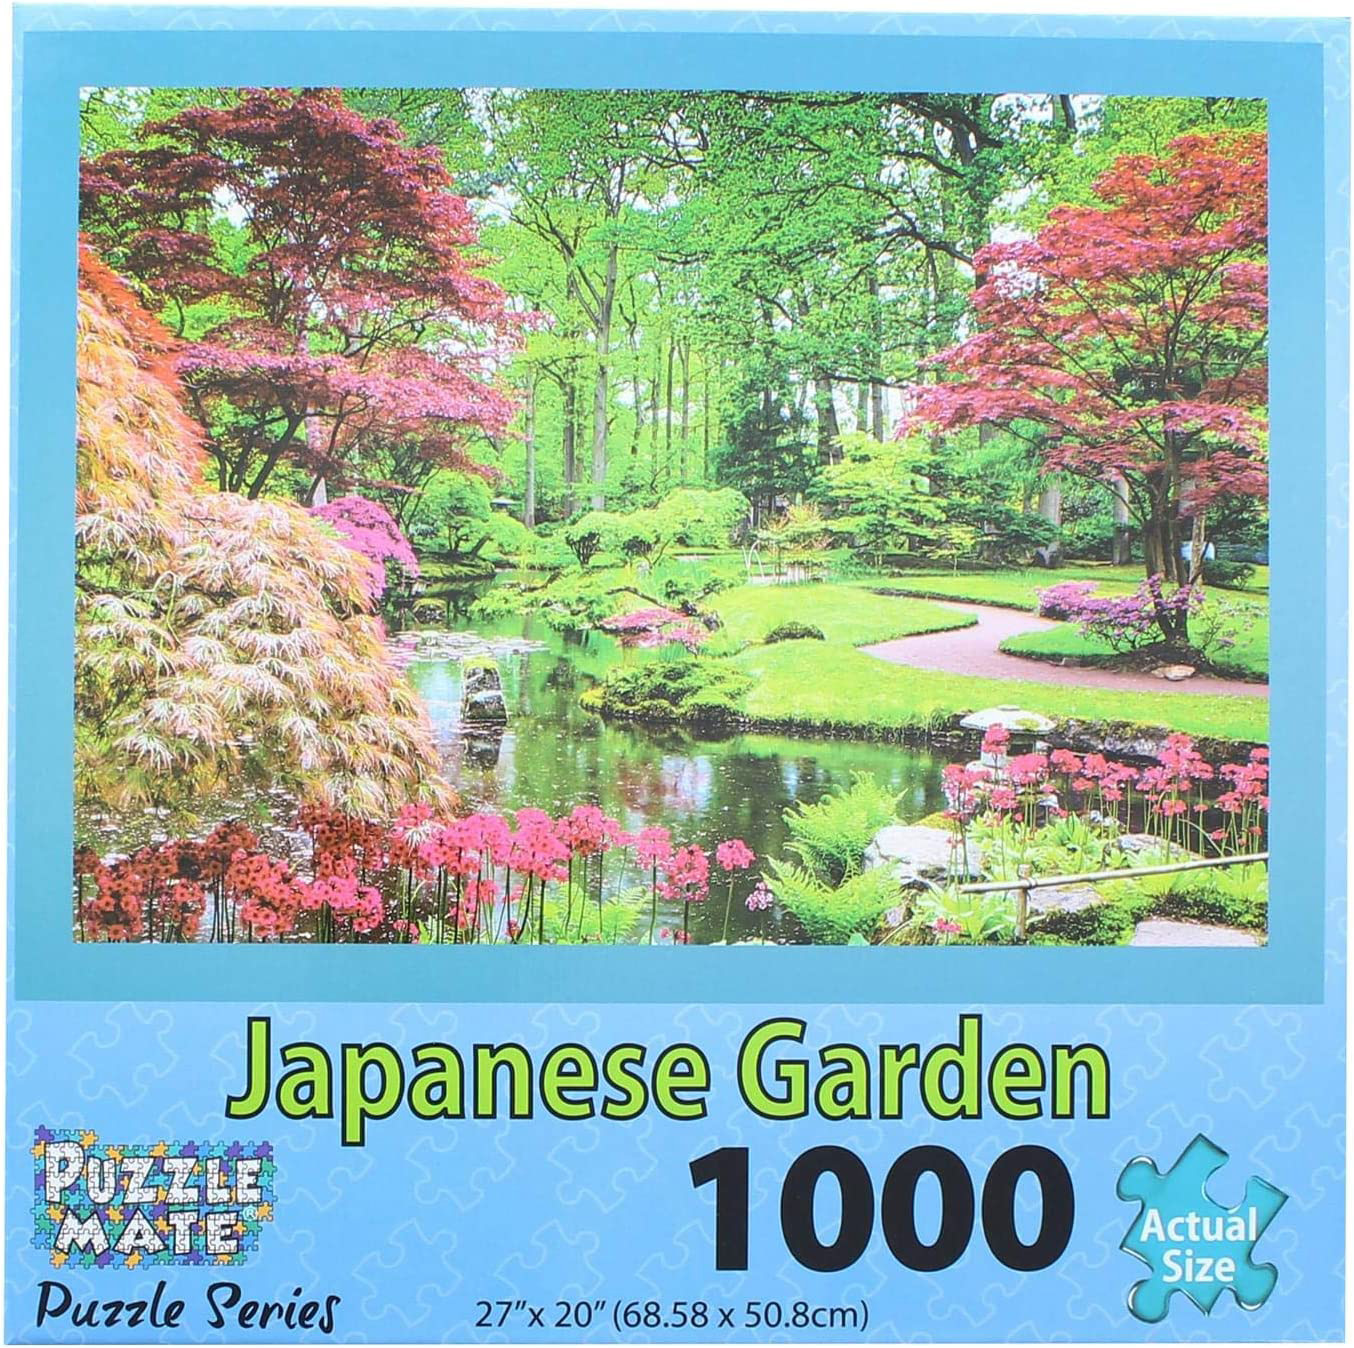 Japanese Garden Travel Jigsaw Puzzle